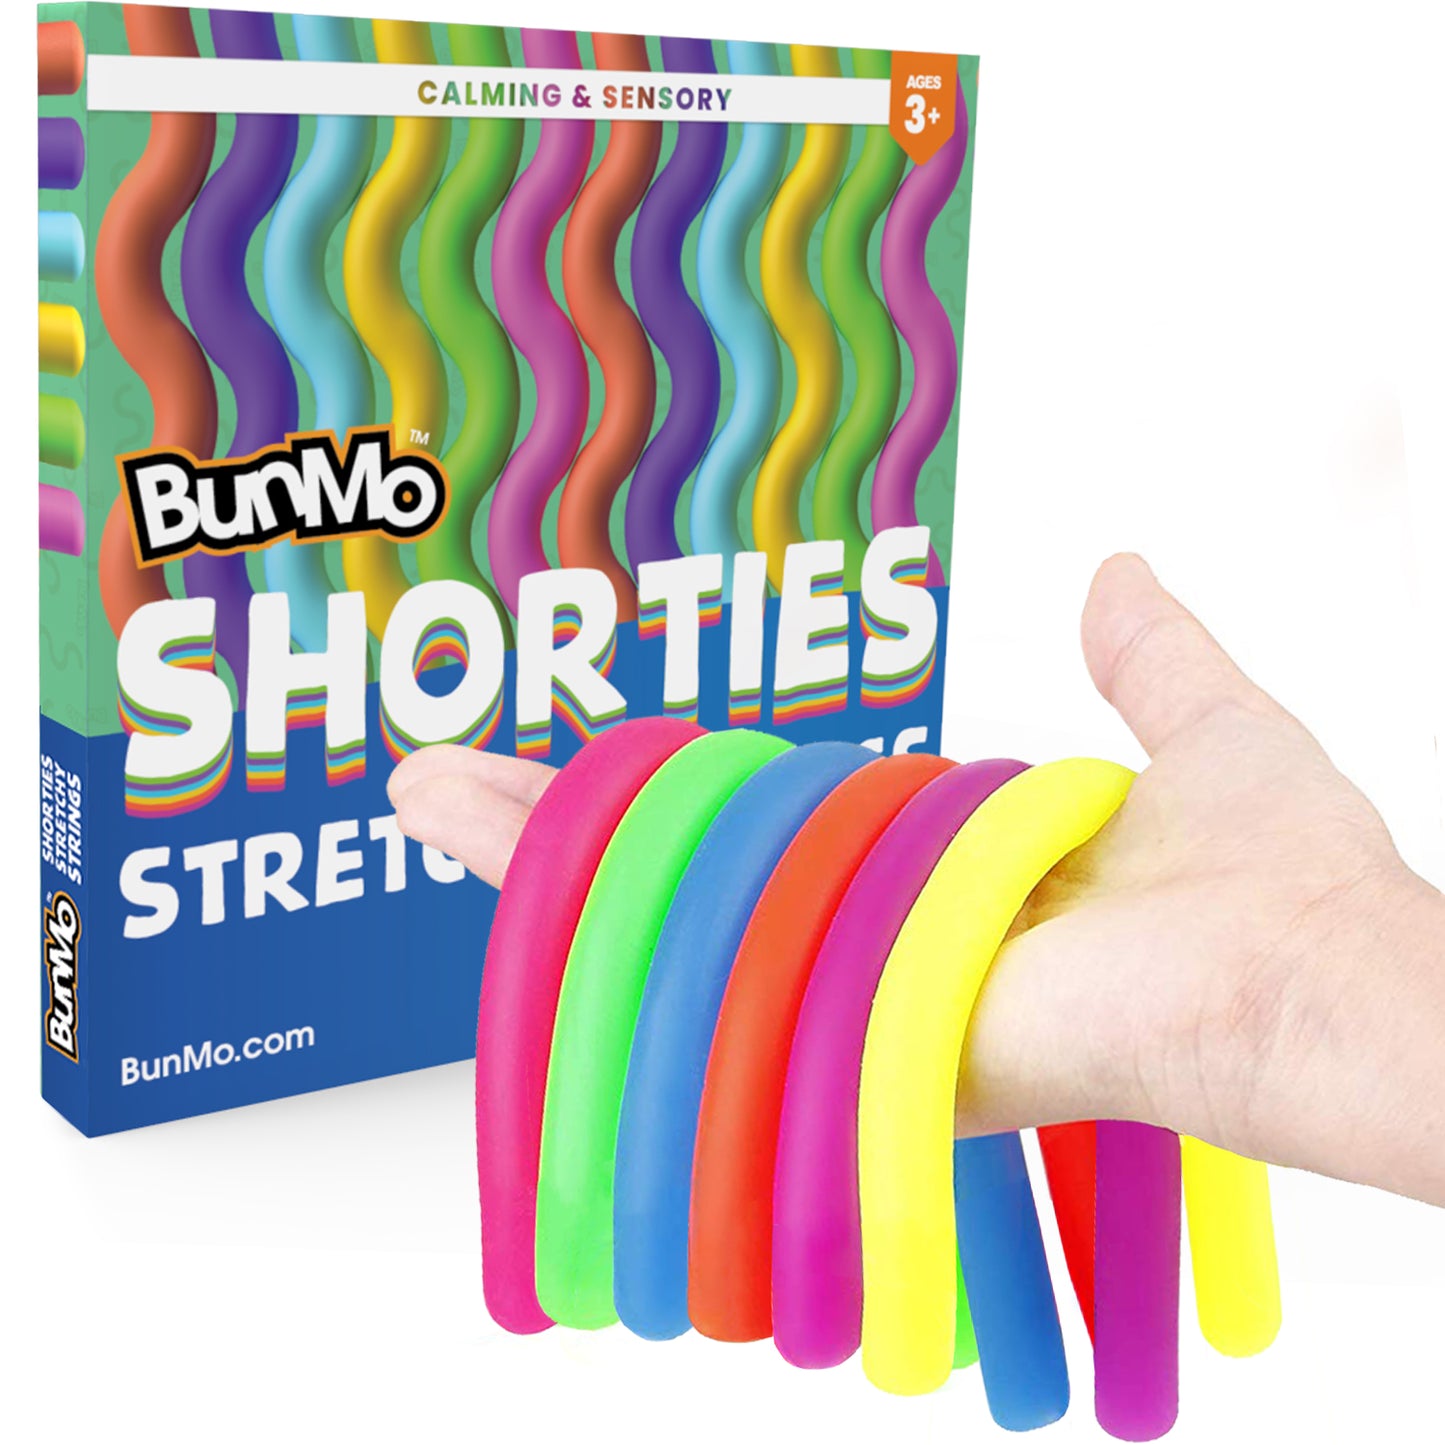 ‘Shorties’ Original Stretching Toys